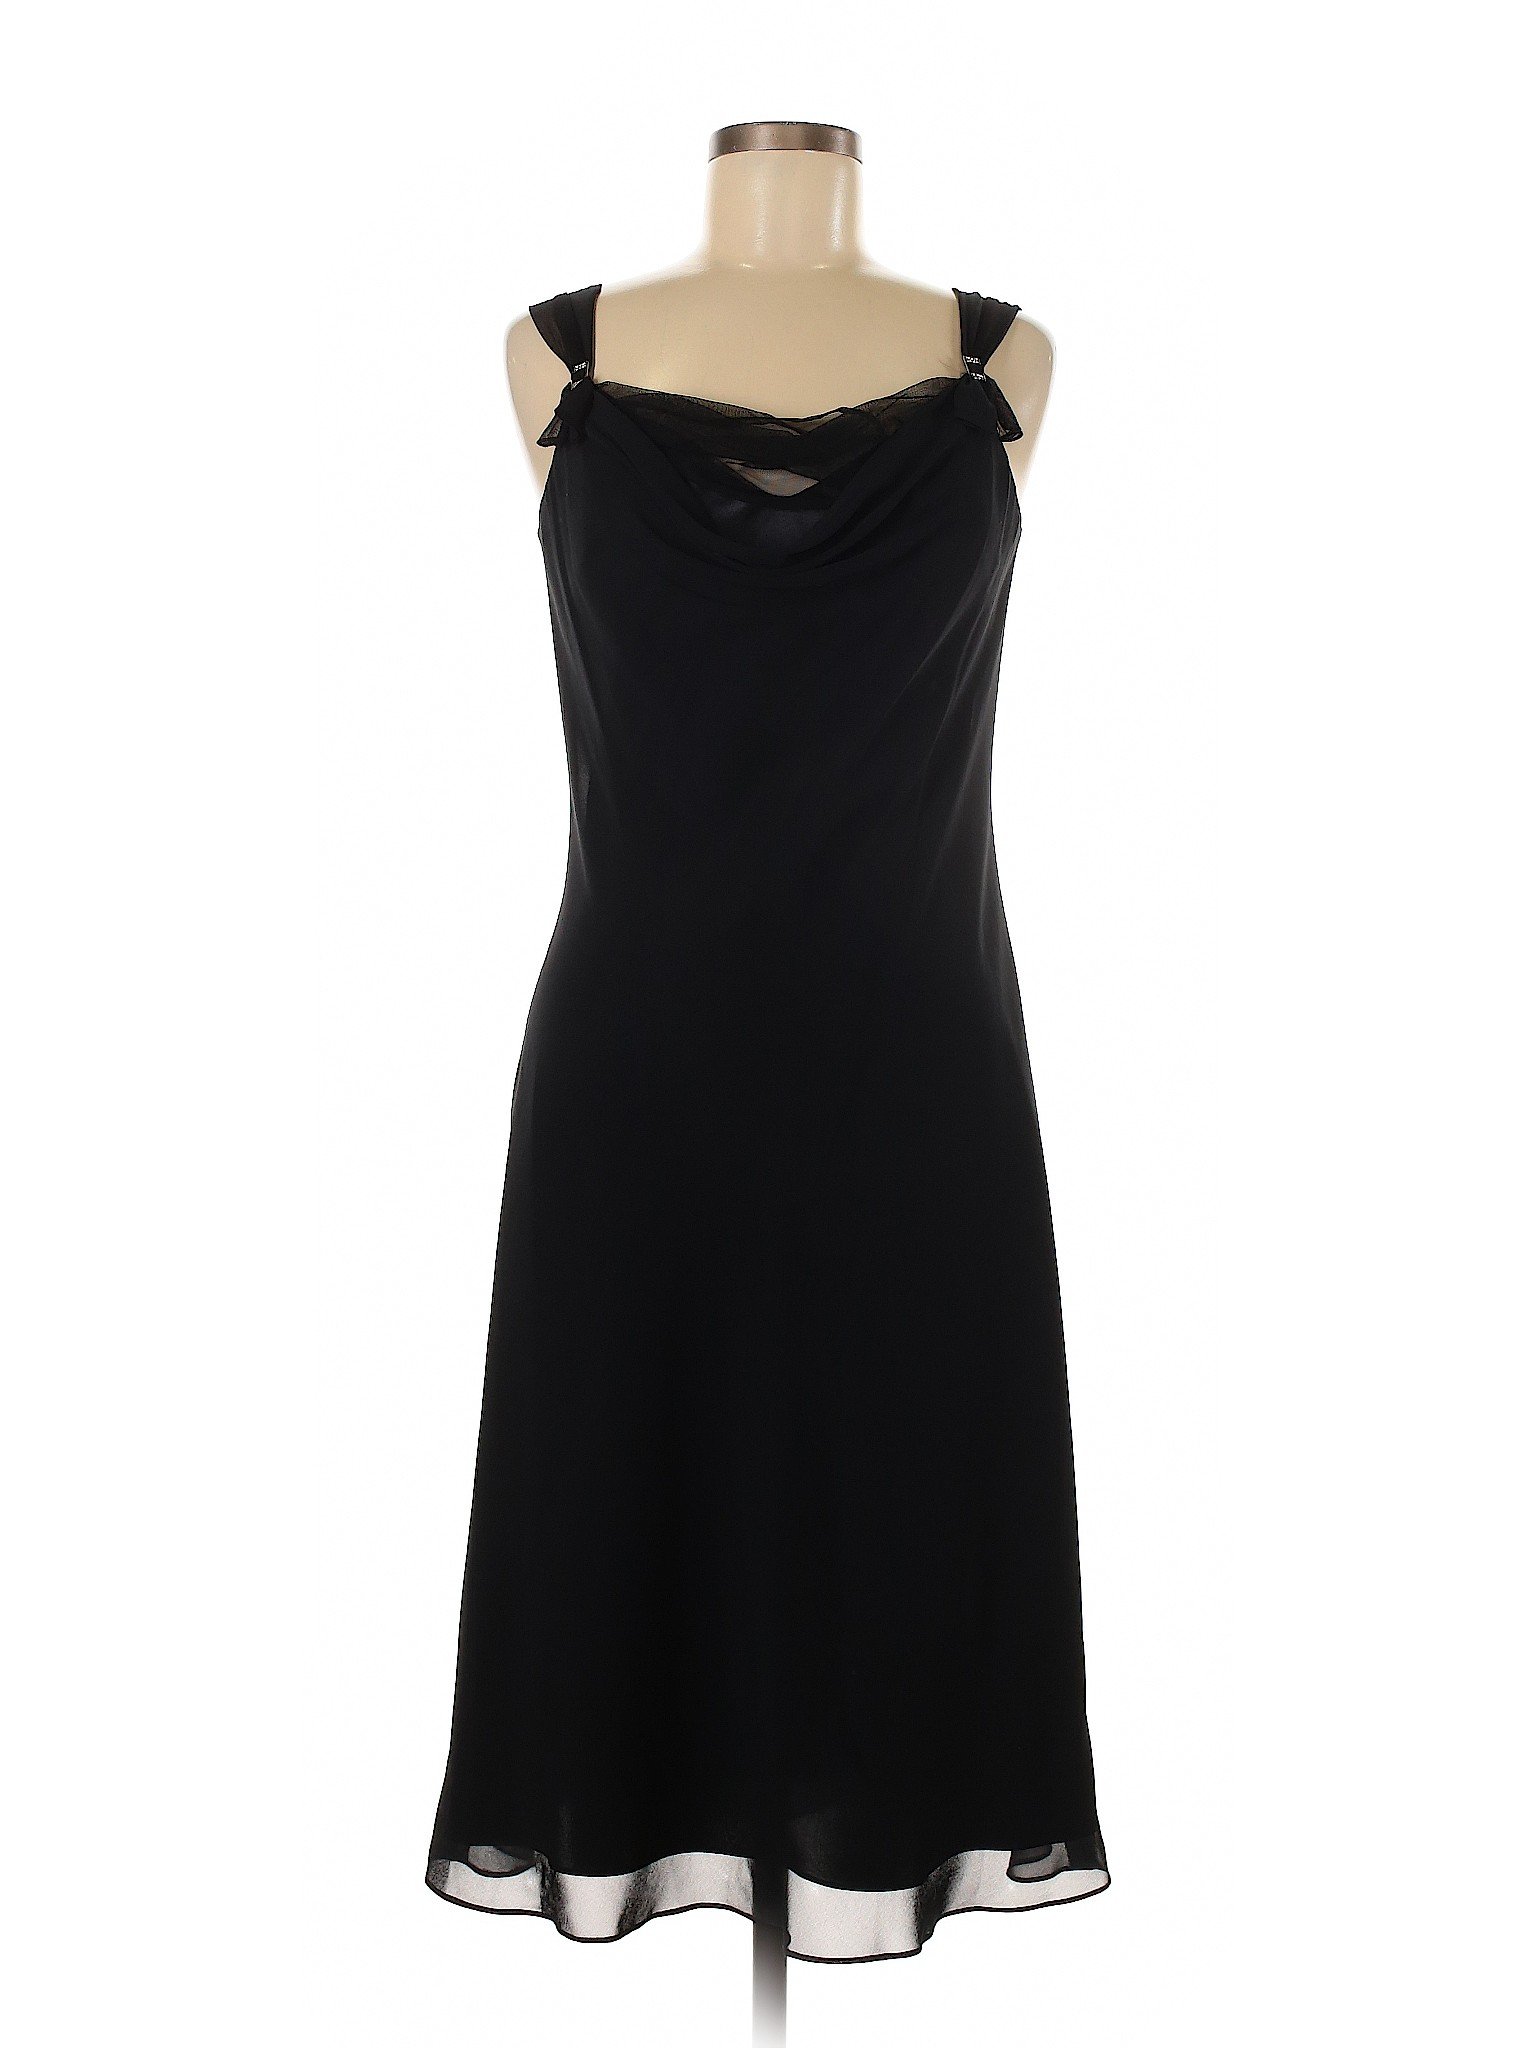 Liz Claiborne Women Black Cocktail Dress 6 | eBay